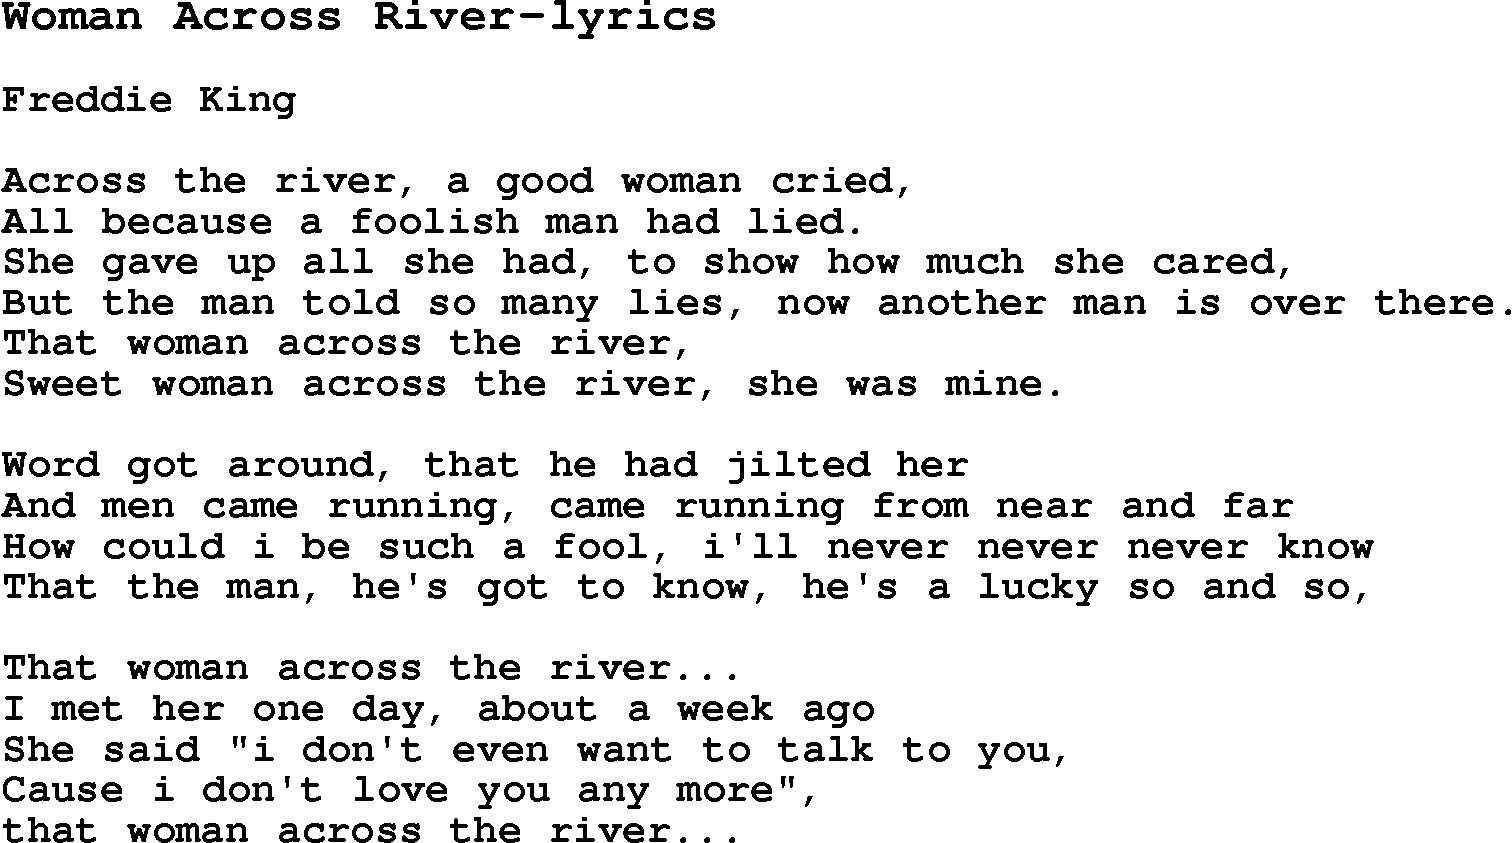 Blues Guitar Song, lyrics, chords, tablature, playing hints for Woman Across River-lyrics